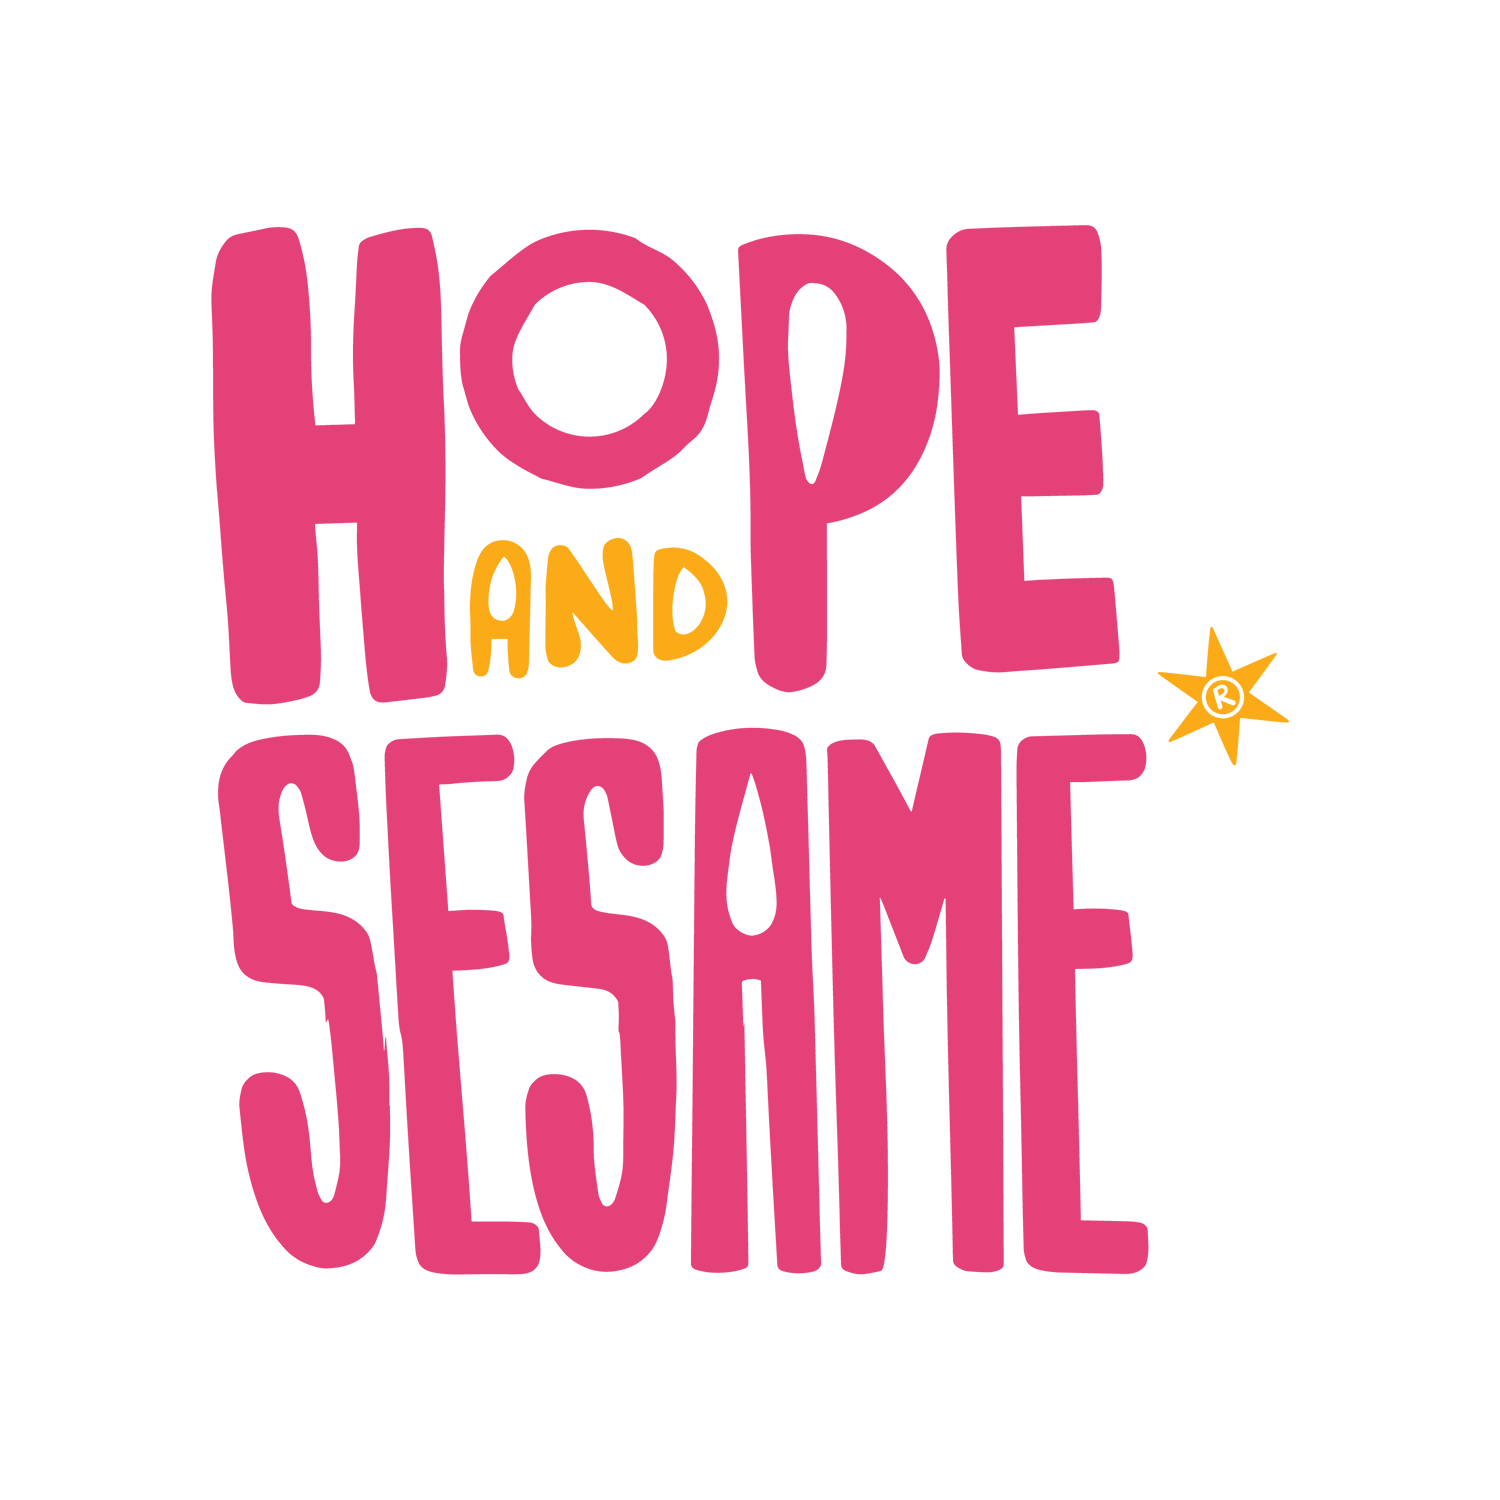 Hope and Sesame Logo